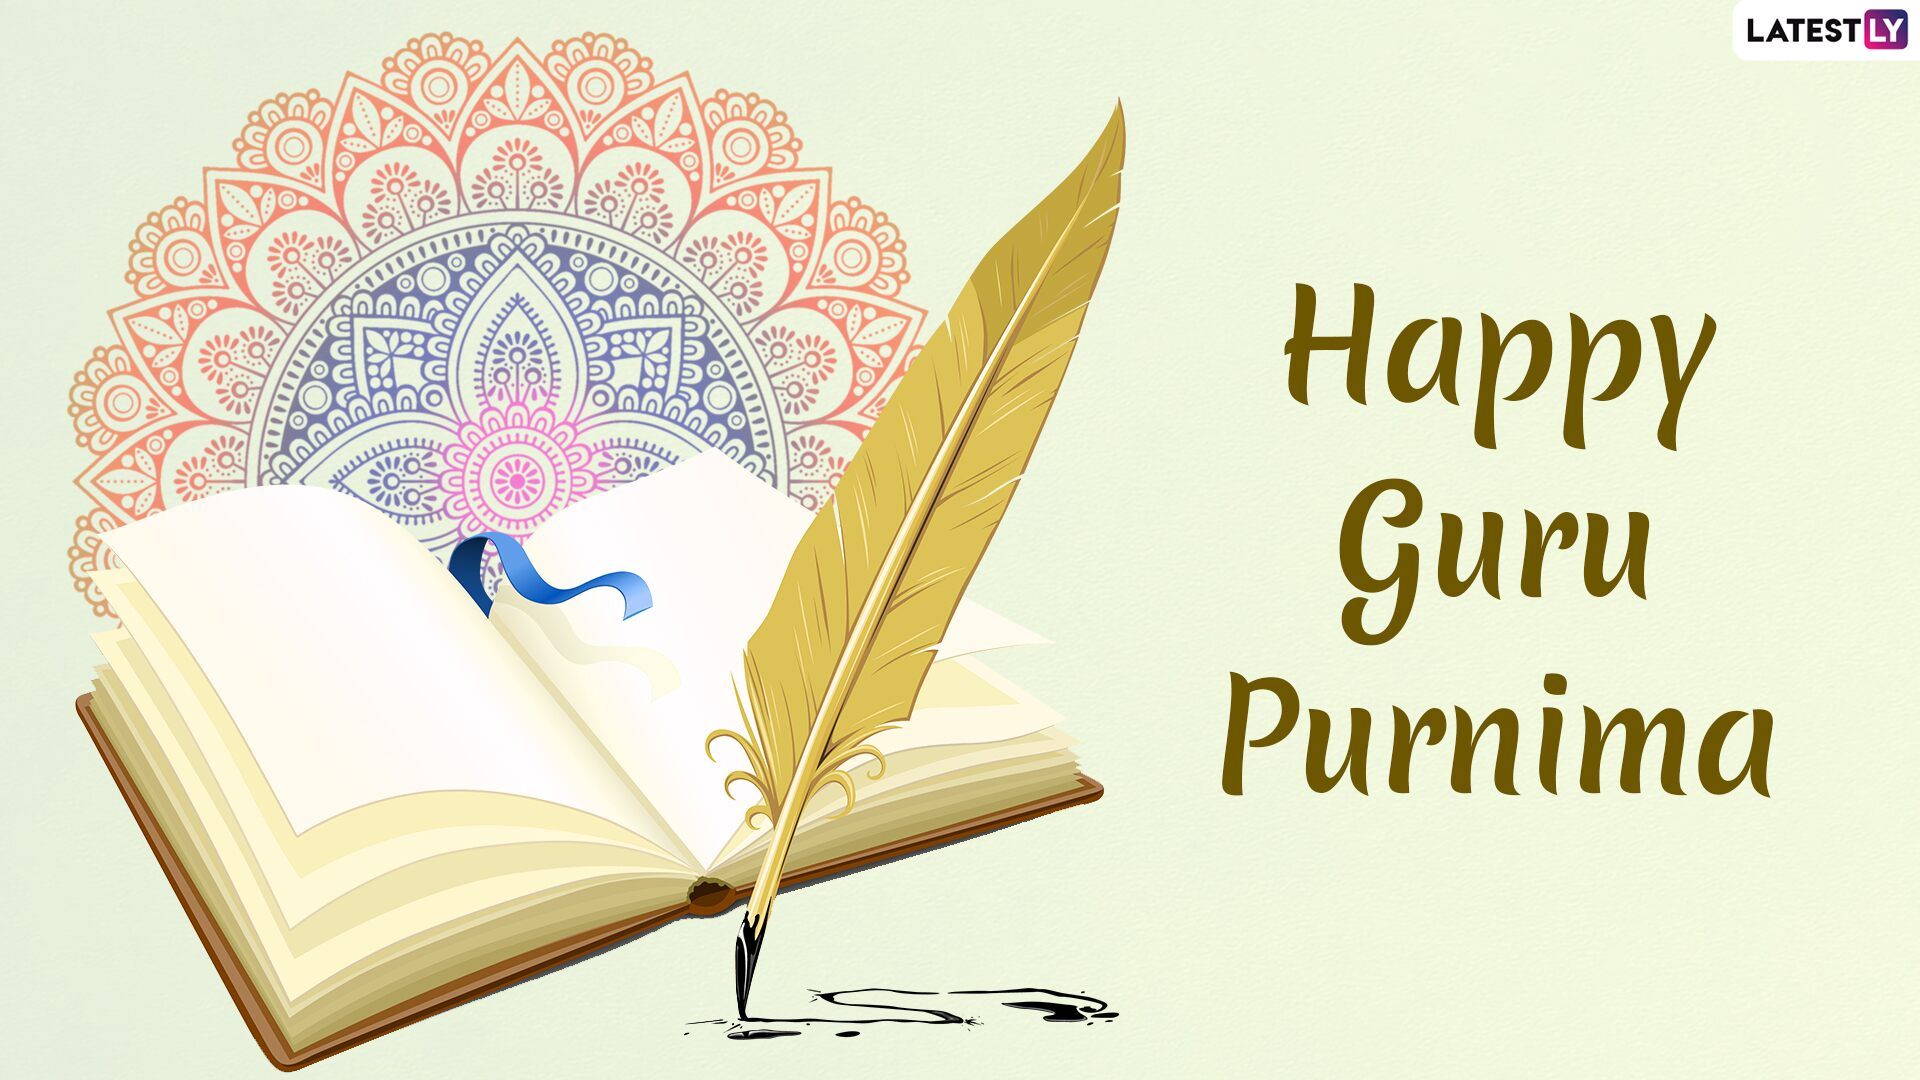 Guru Purnima Images – Browse 3,064 Stock Photos, Vectors, and Video | Adobe  Stock